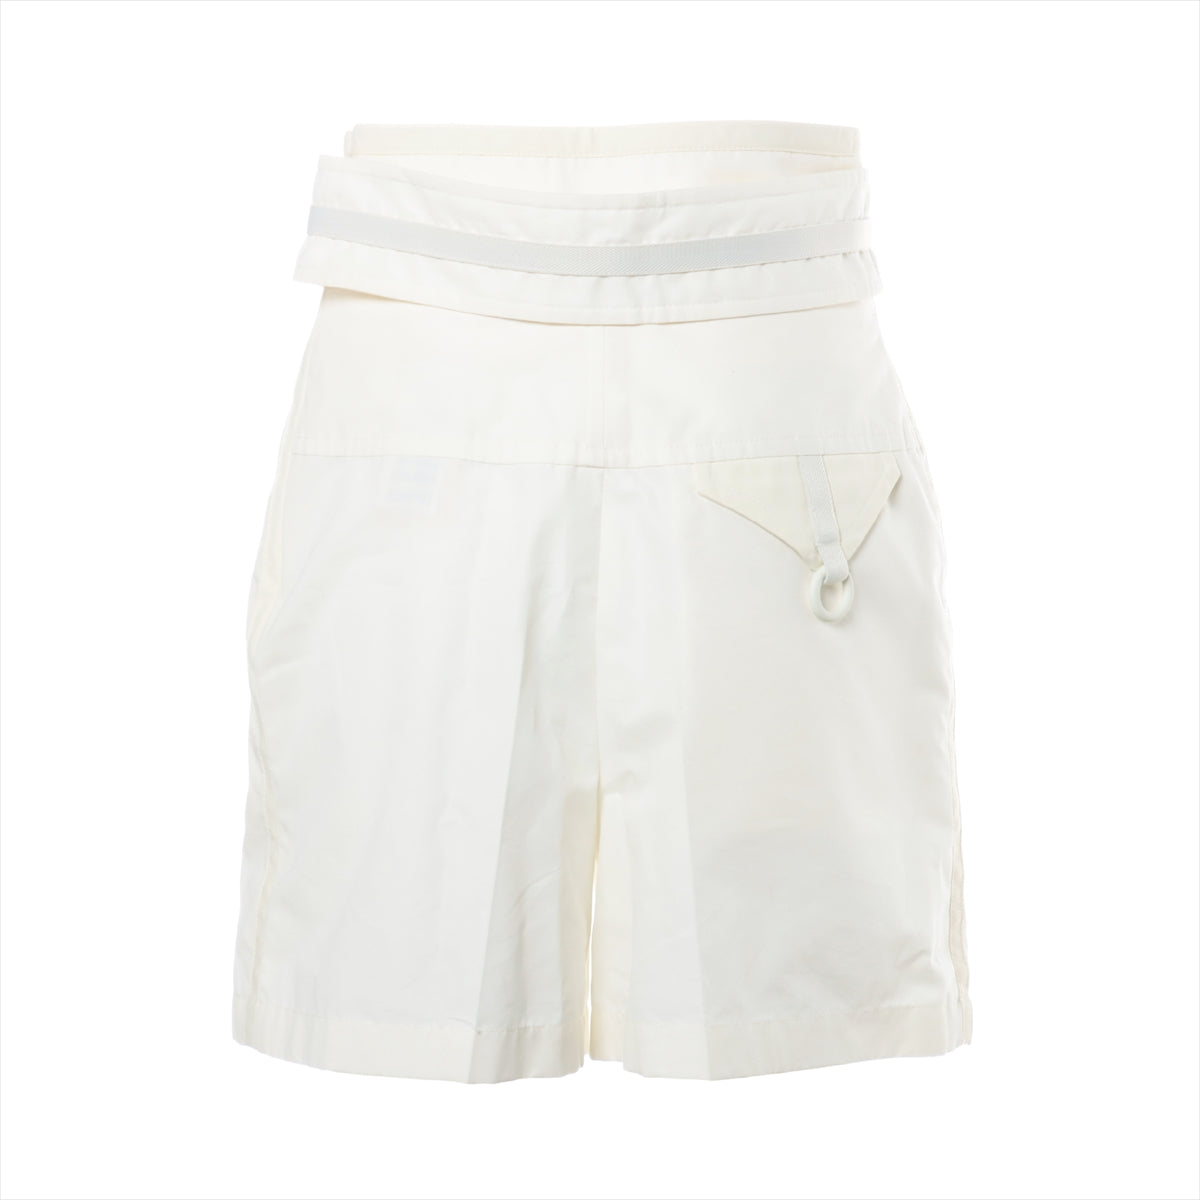 Hermès Cotton Short pants 34 Ladies' White